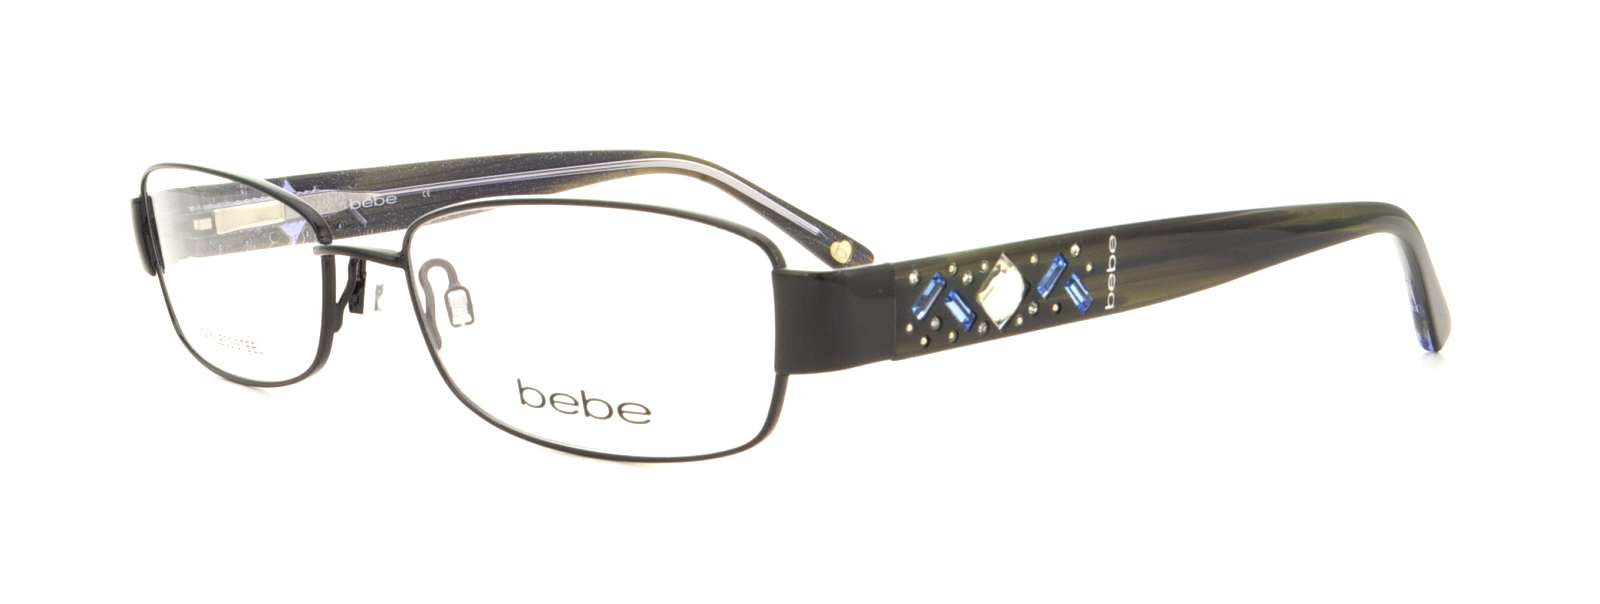 Picture of Bebe Eyeglasses BB5050